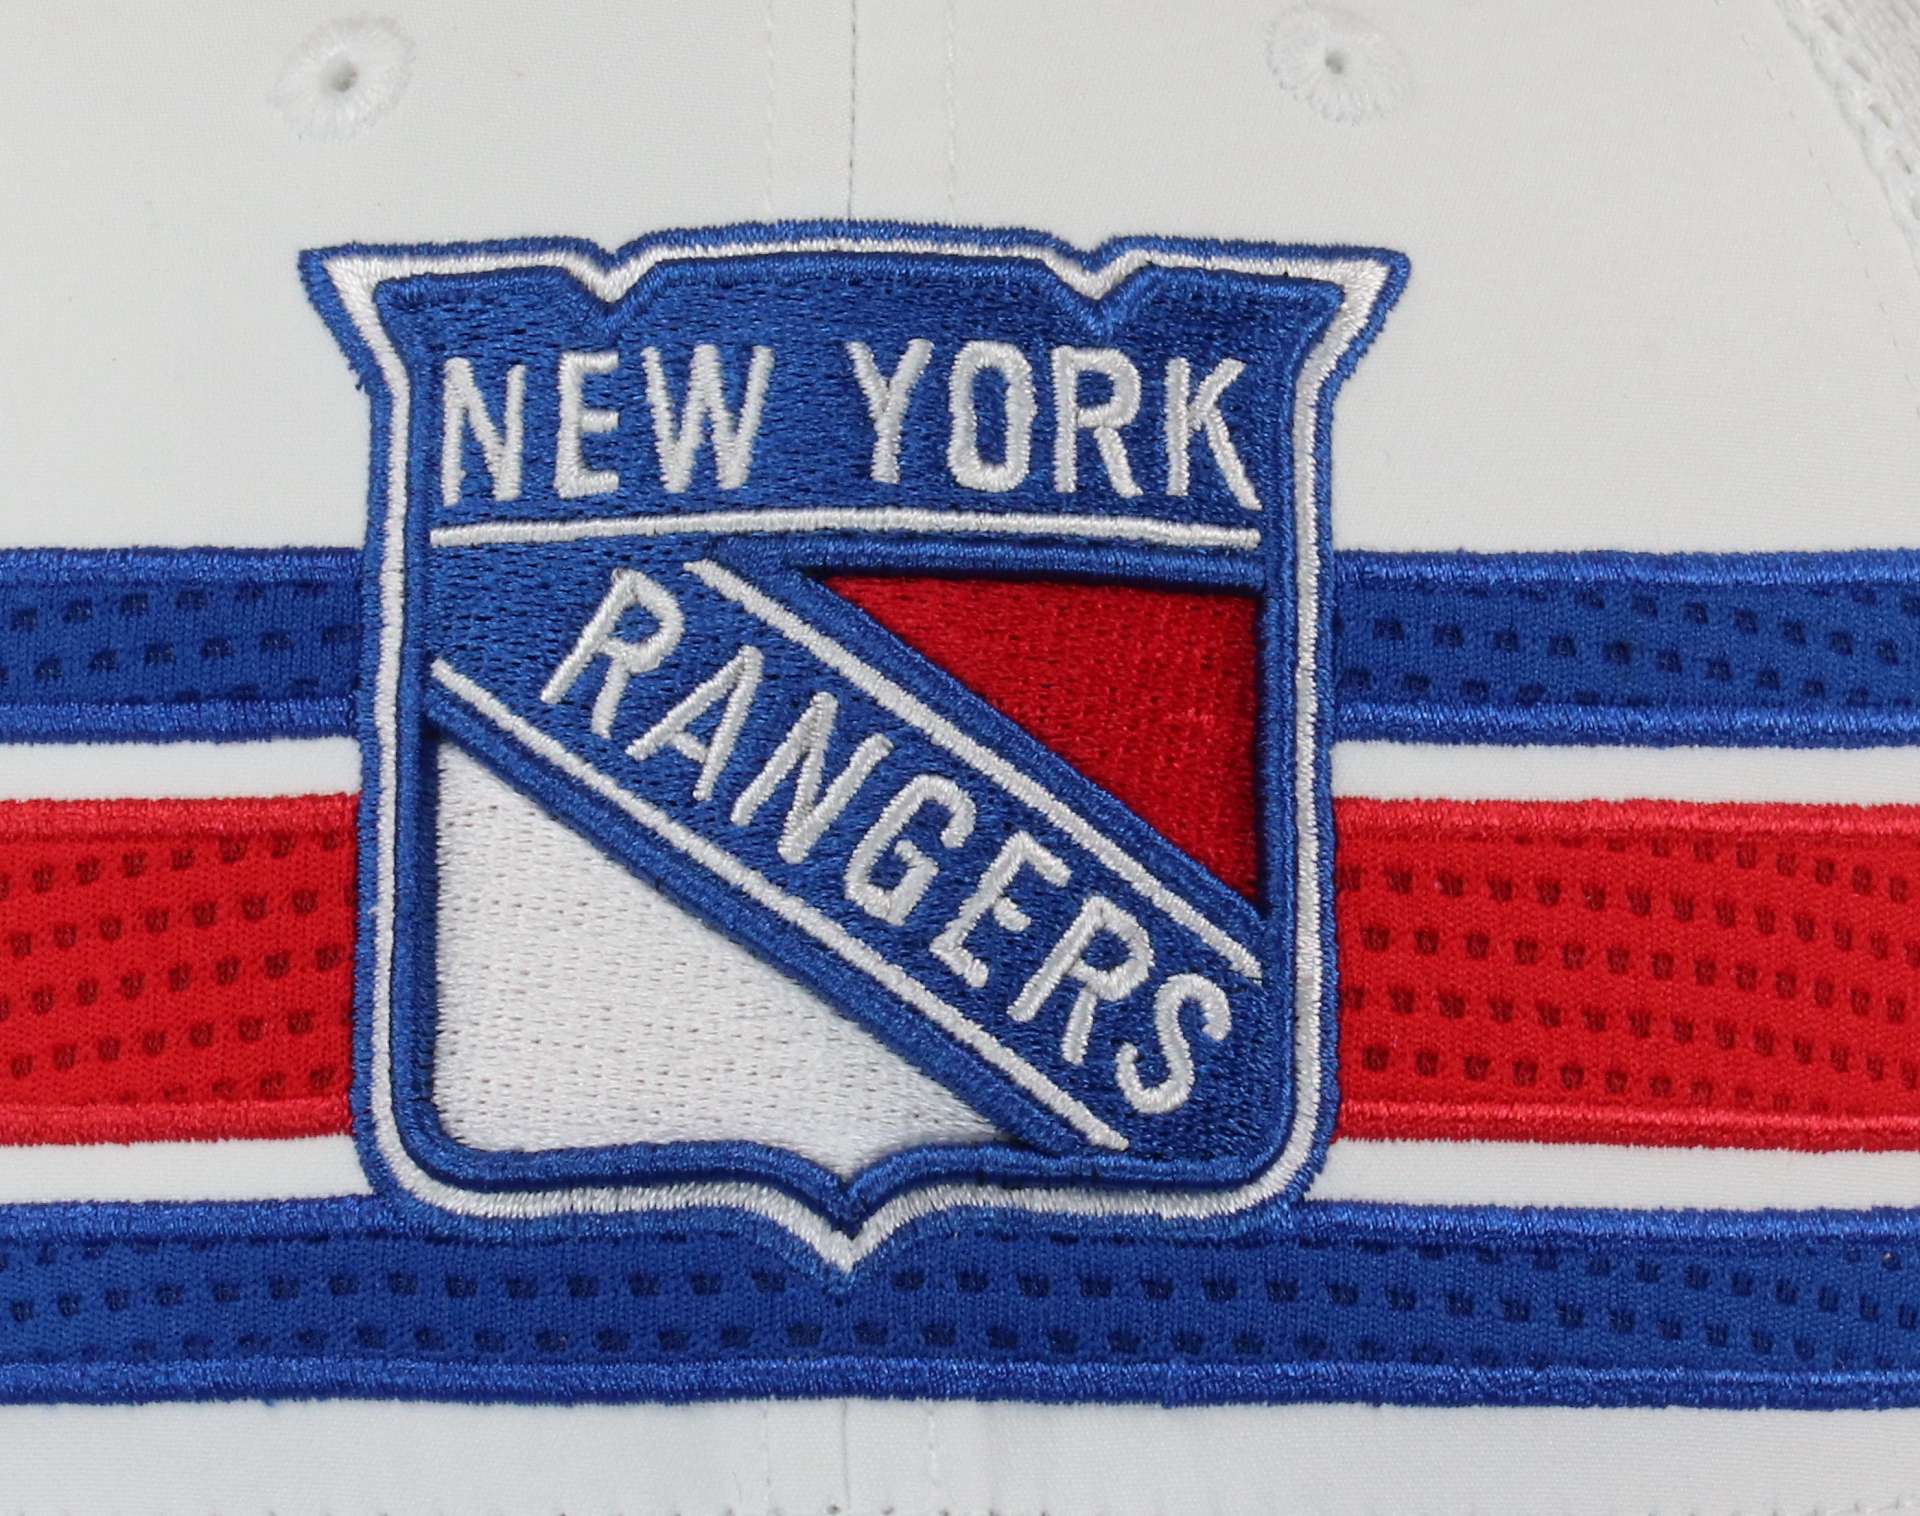 New York Rangers NHL Authentic Pro Draft Jersey Hook Structured Trucker Cap Fanatics